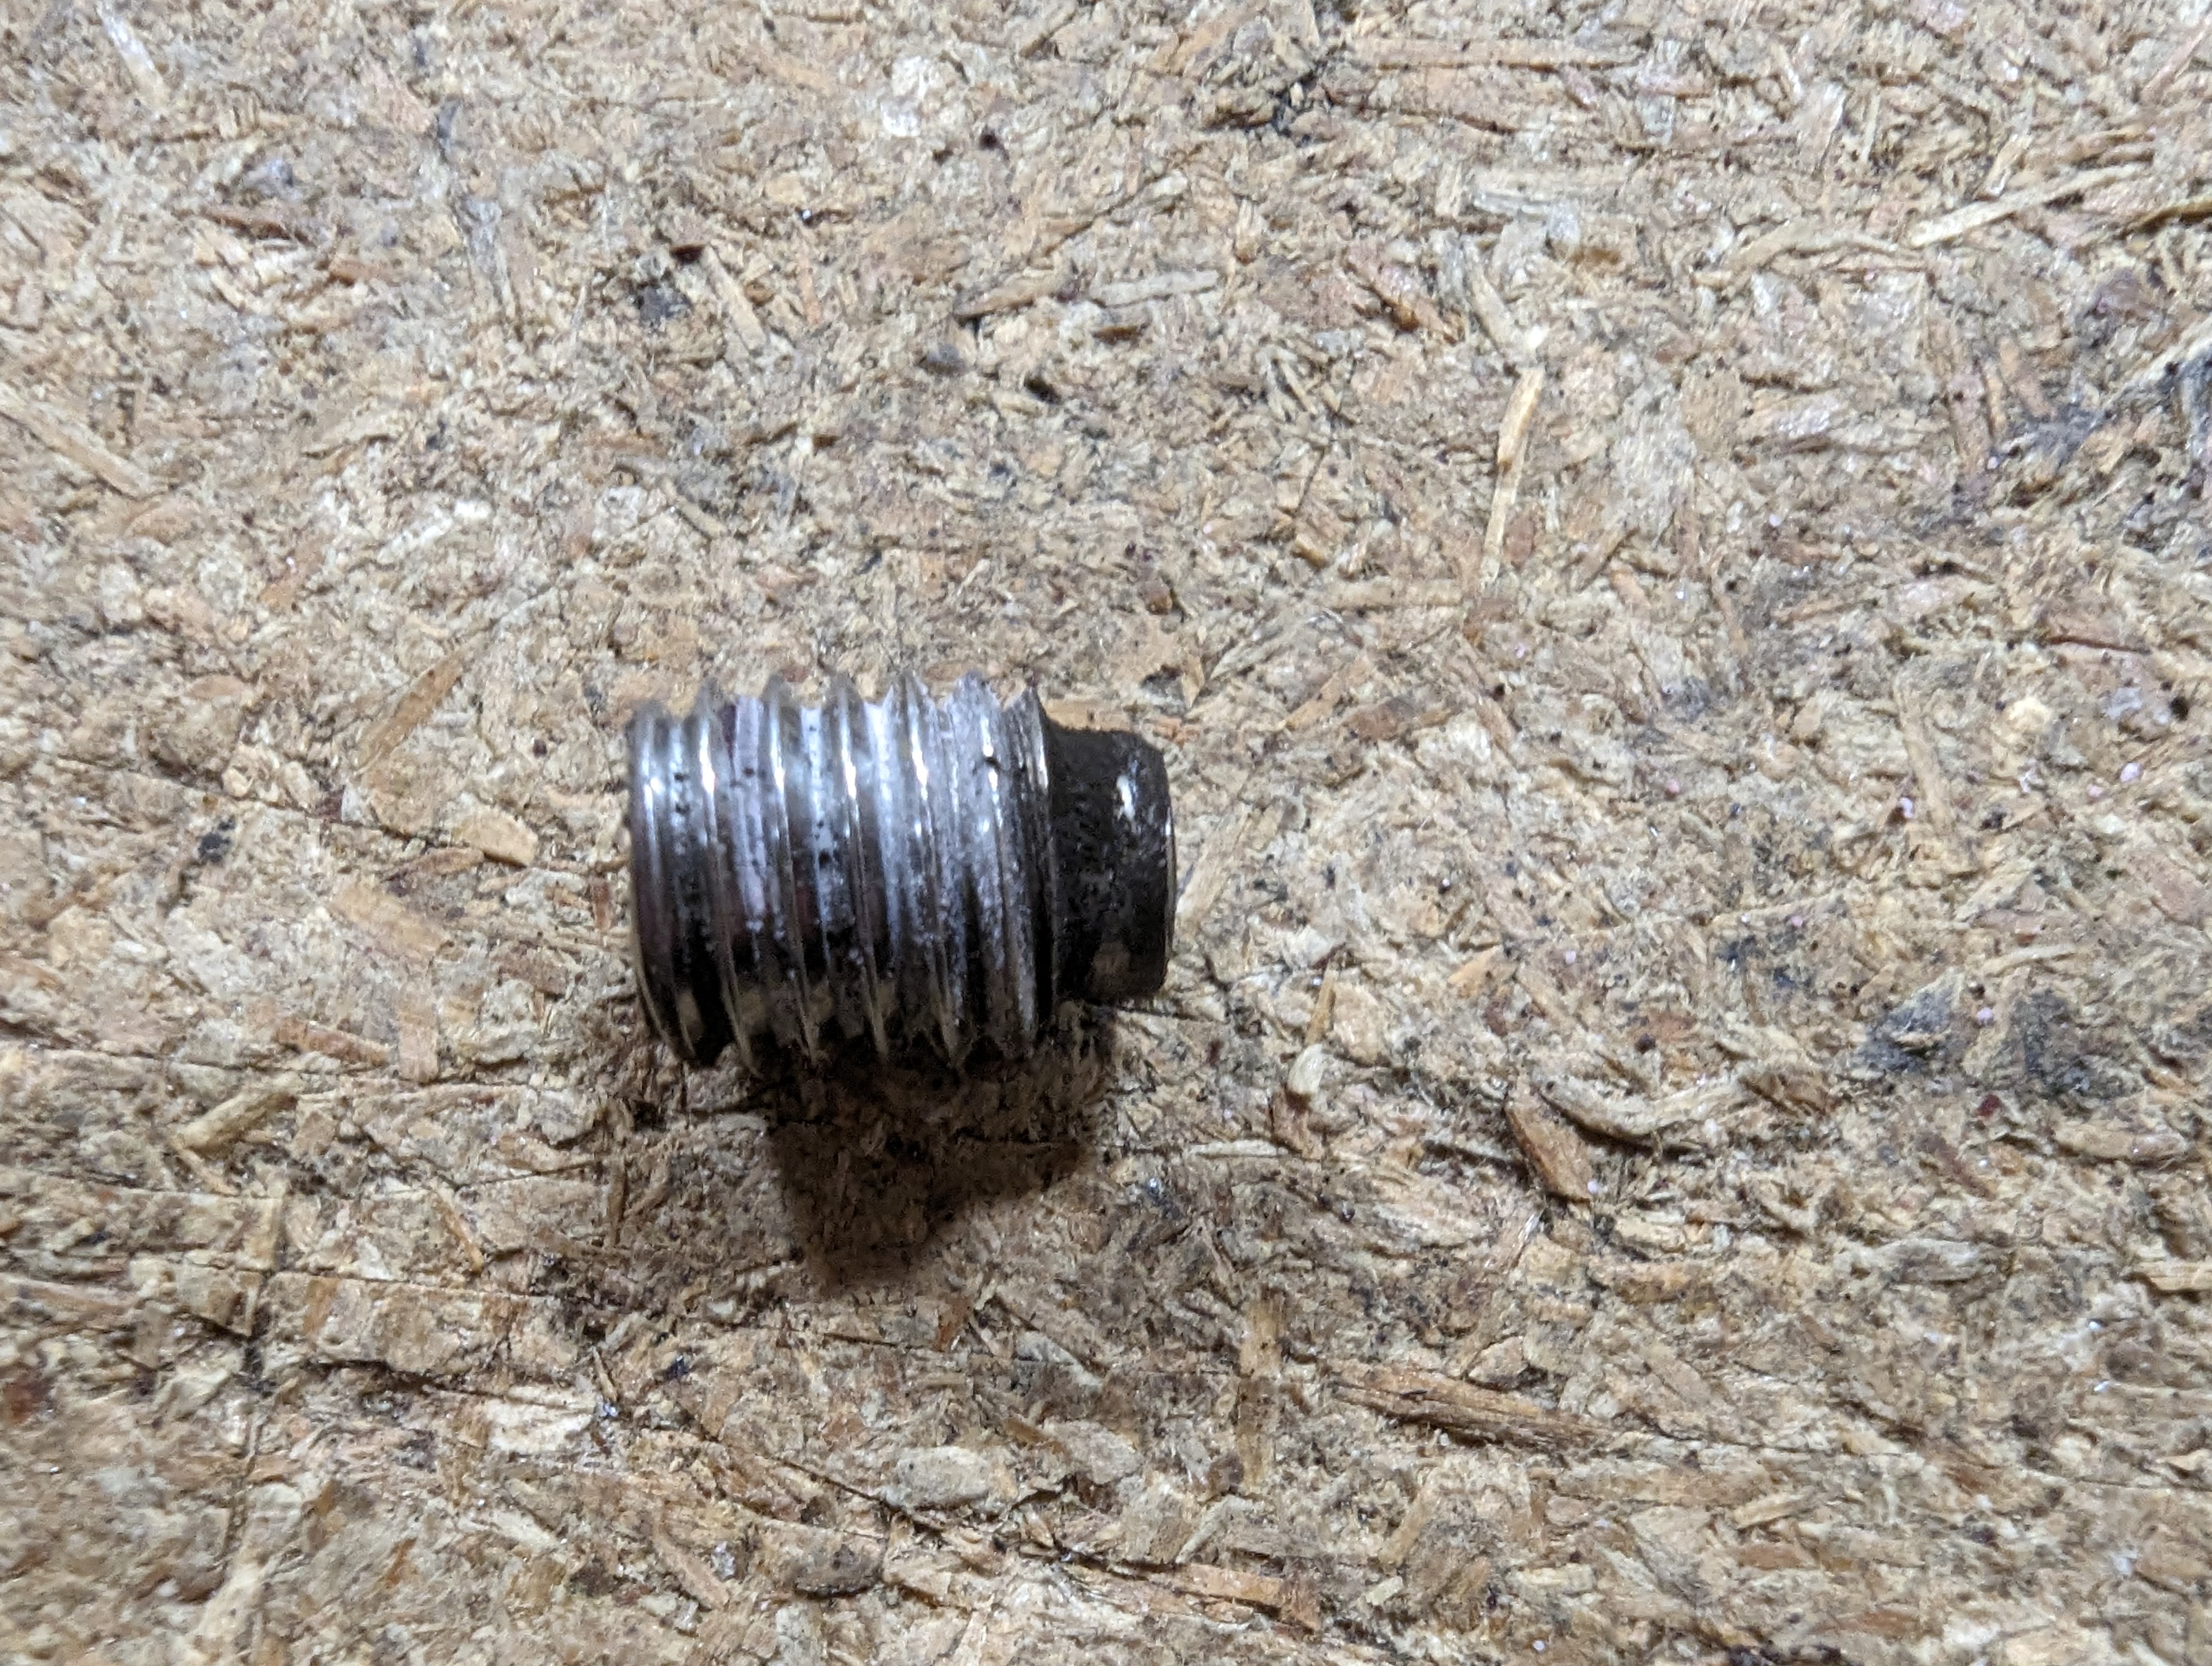 A very worn and damaged grub screw